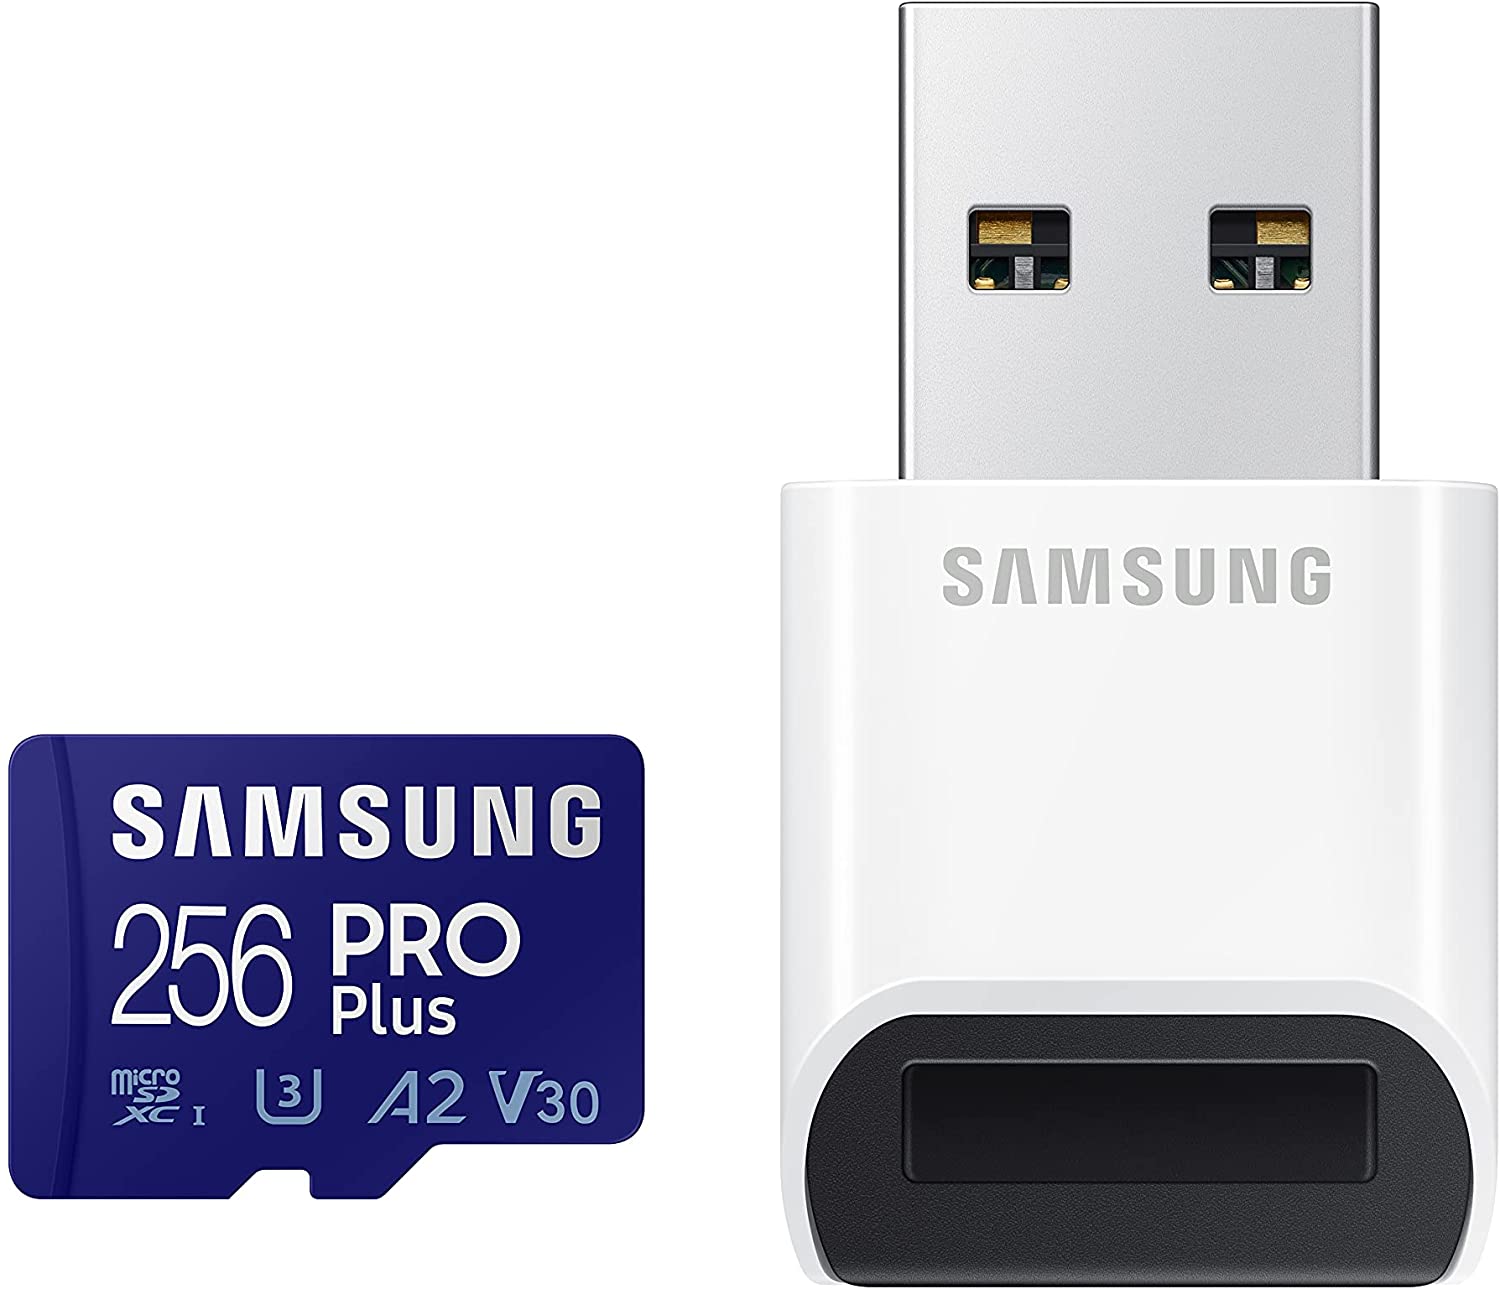 SAMSUNG PRO Plus + Reader 256GB microSDXC Up to 160MB/s UHS-I, U3, A2, V30, Full HD & 4K UHD Memory Card $43.99